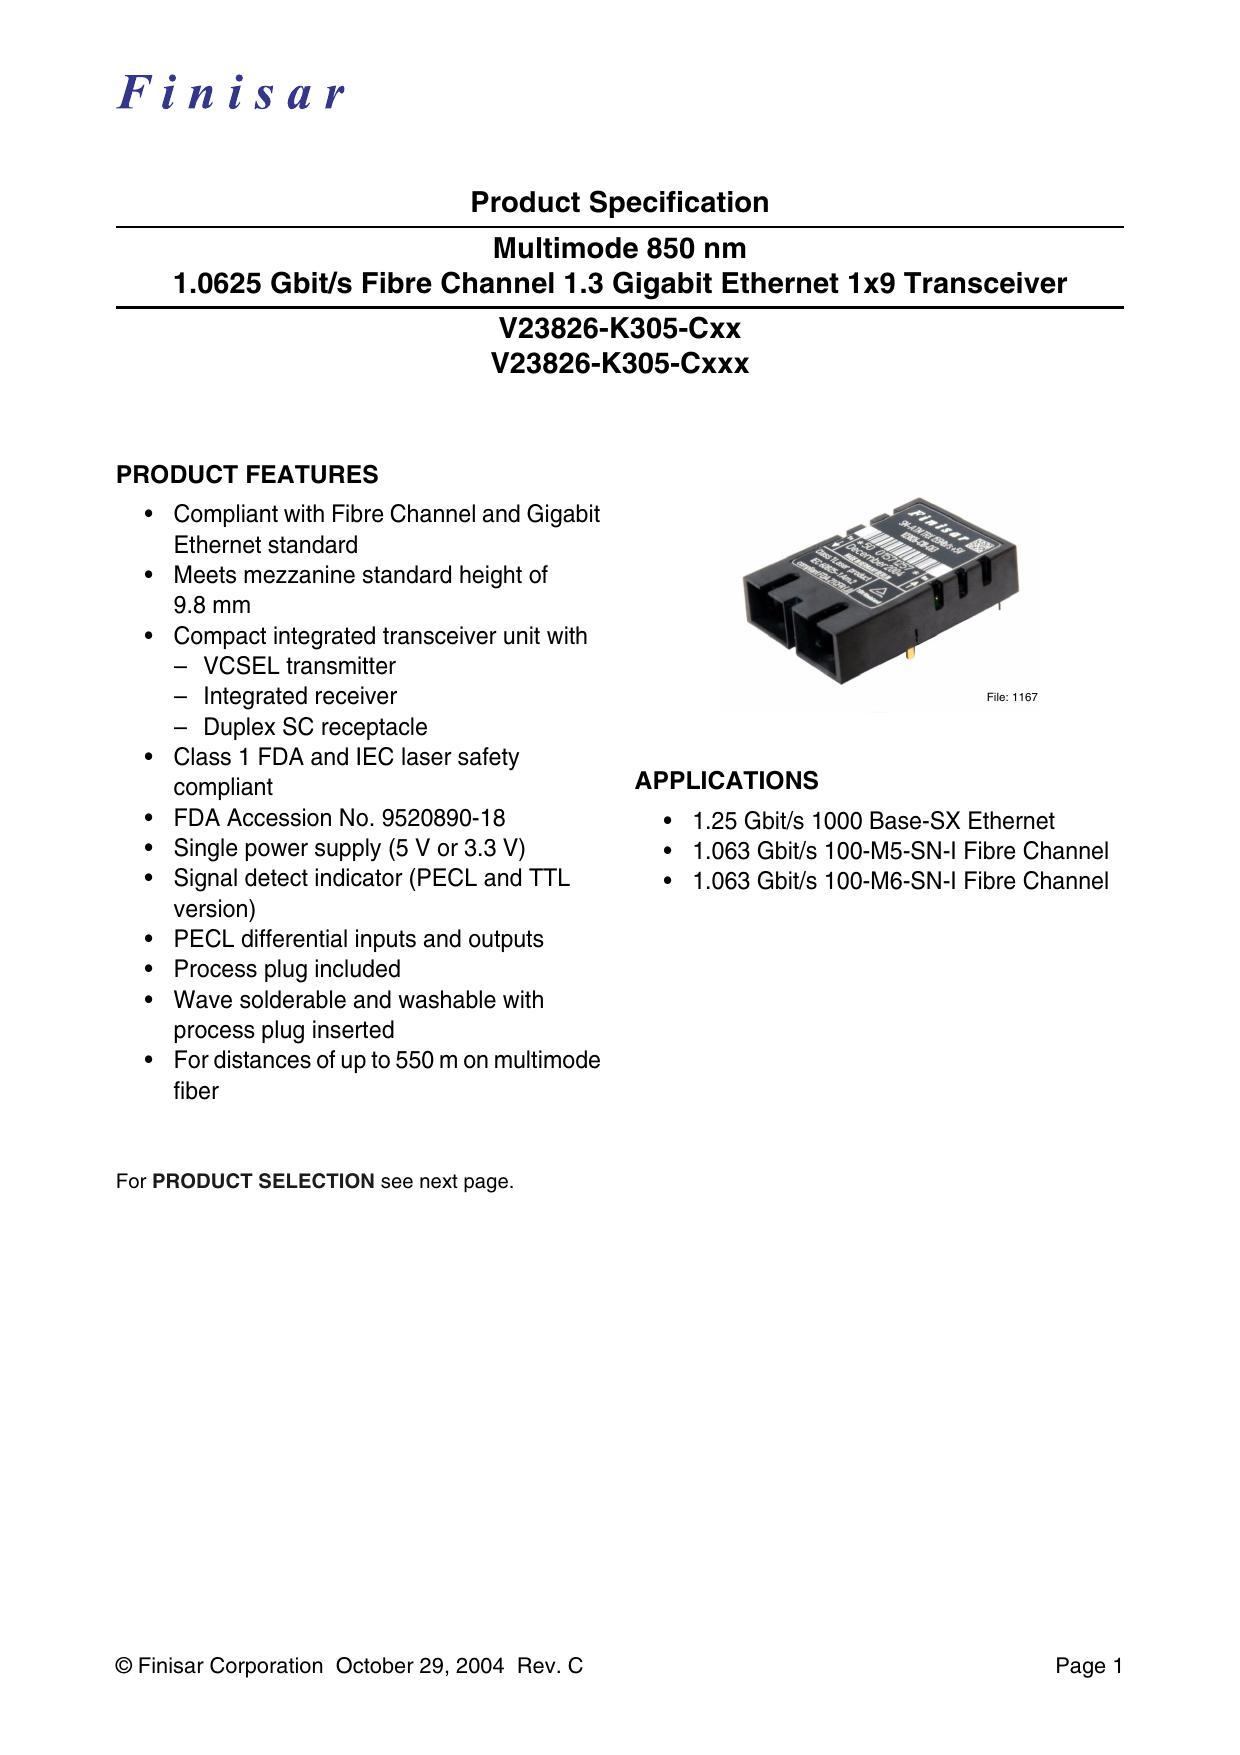 fibre-channel-and-gigabit-ethernet-multimode-850-nm-ix9-transceiver-specifications.pdf